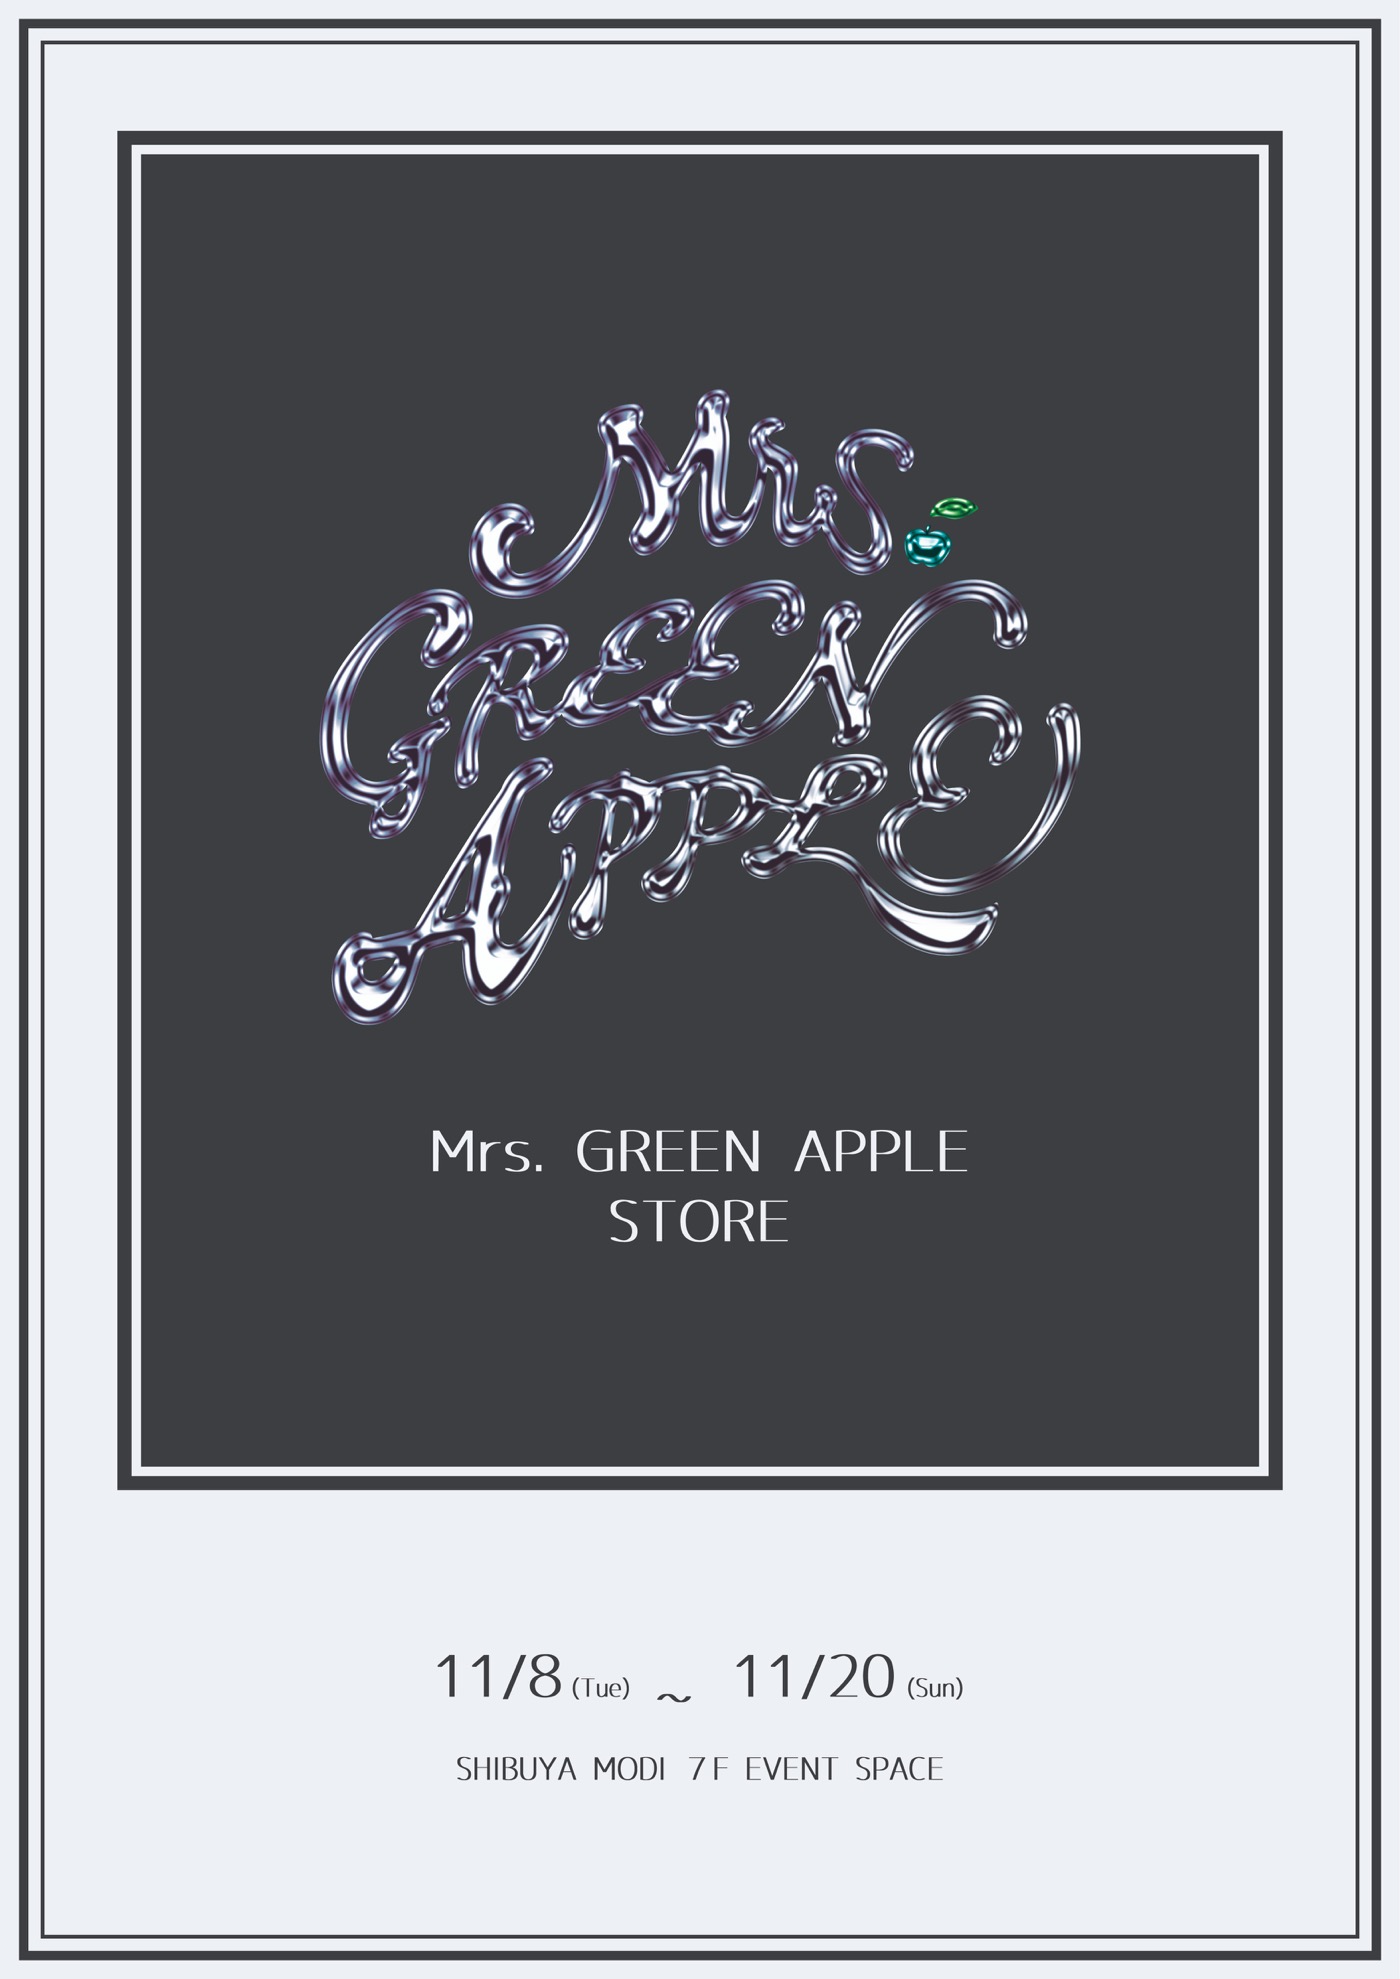 Mrs. GREEN APPLE、ポップアップストア「Mrs. GREEN APPLE STORE」が期間限定でオープン - 画像一覧（2/2）